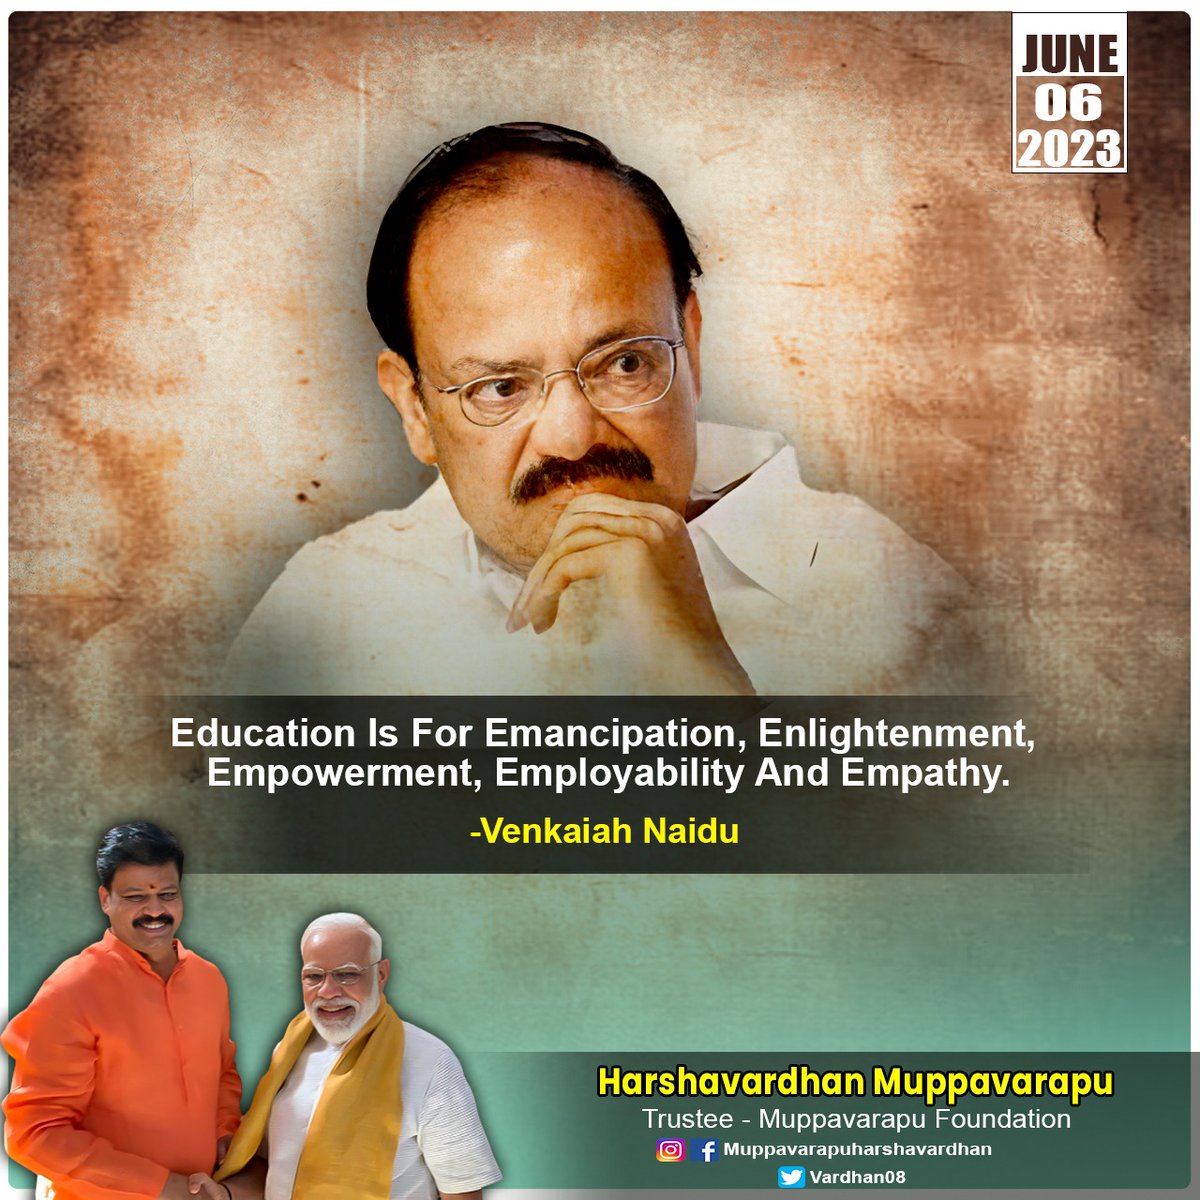 Education Is For Emancipation, Enlightenment, Empowerment, Employability And Empathy.

- #VenkaiahNaidu